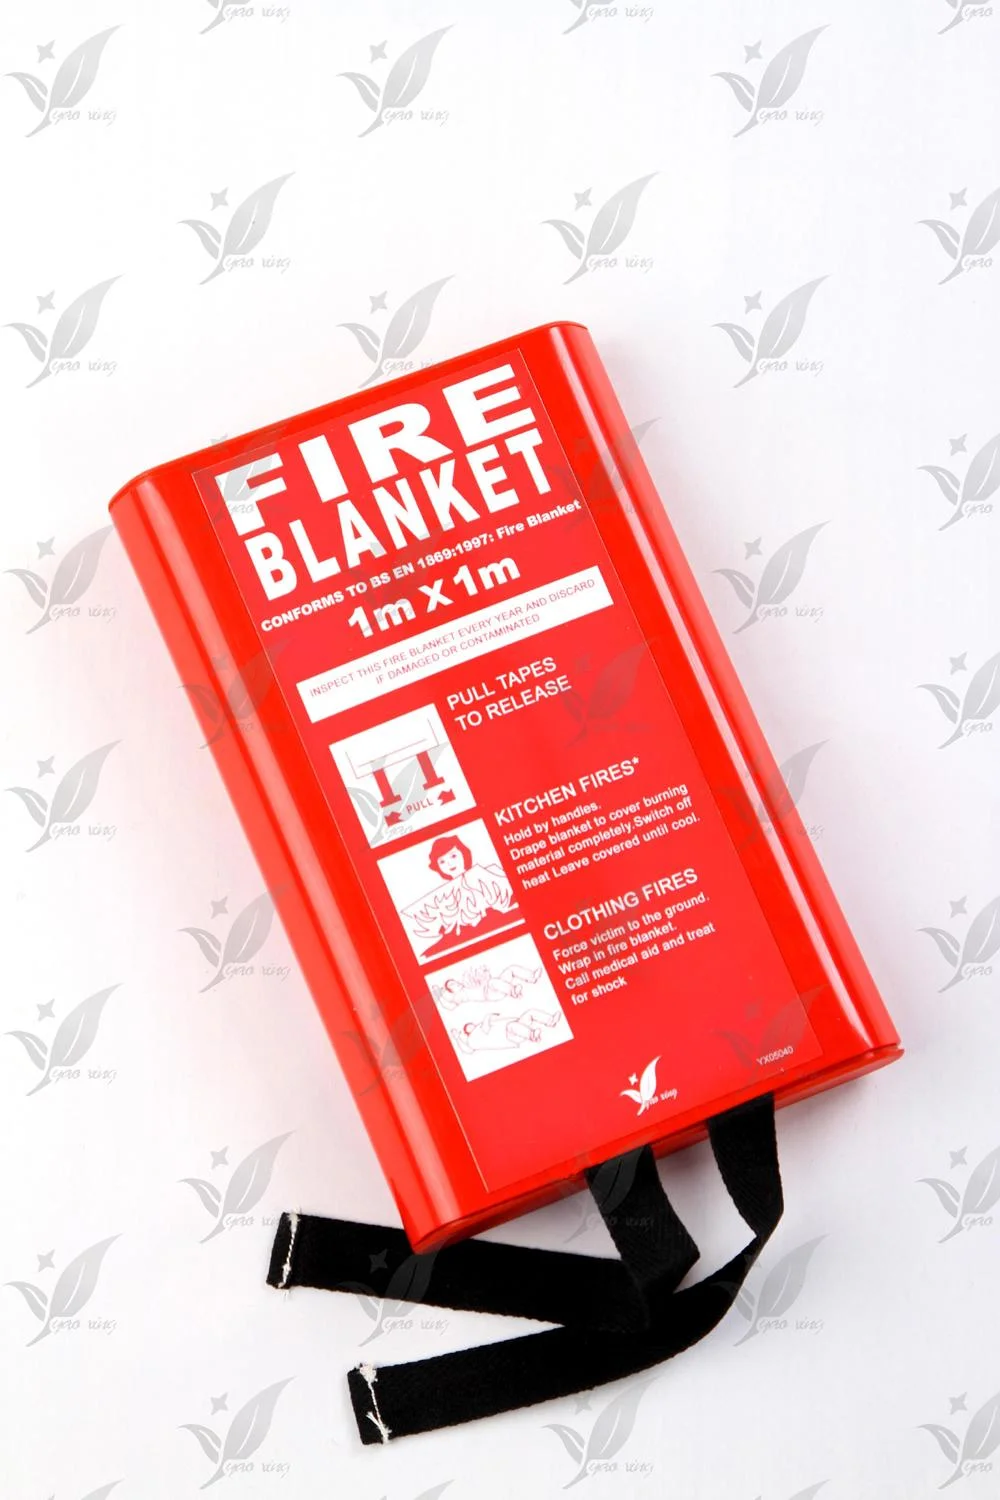 Fire Resistant Blanket Coated Fire Blanket En1869